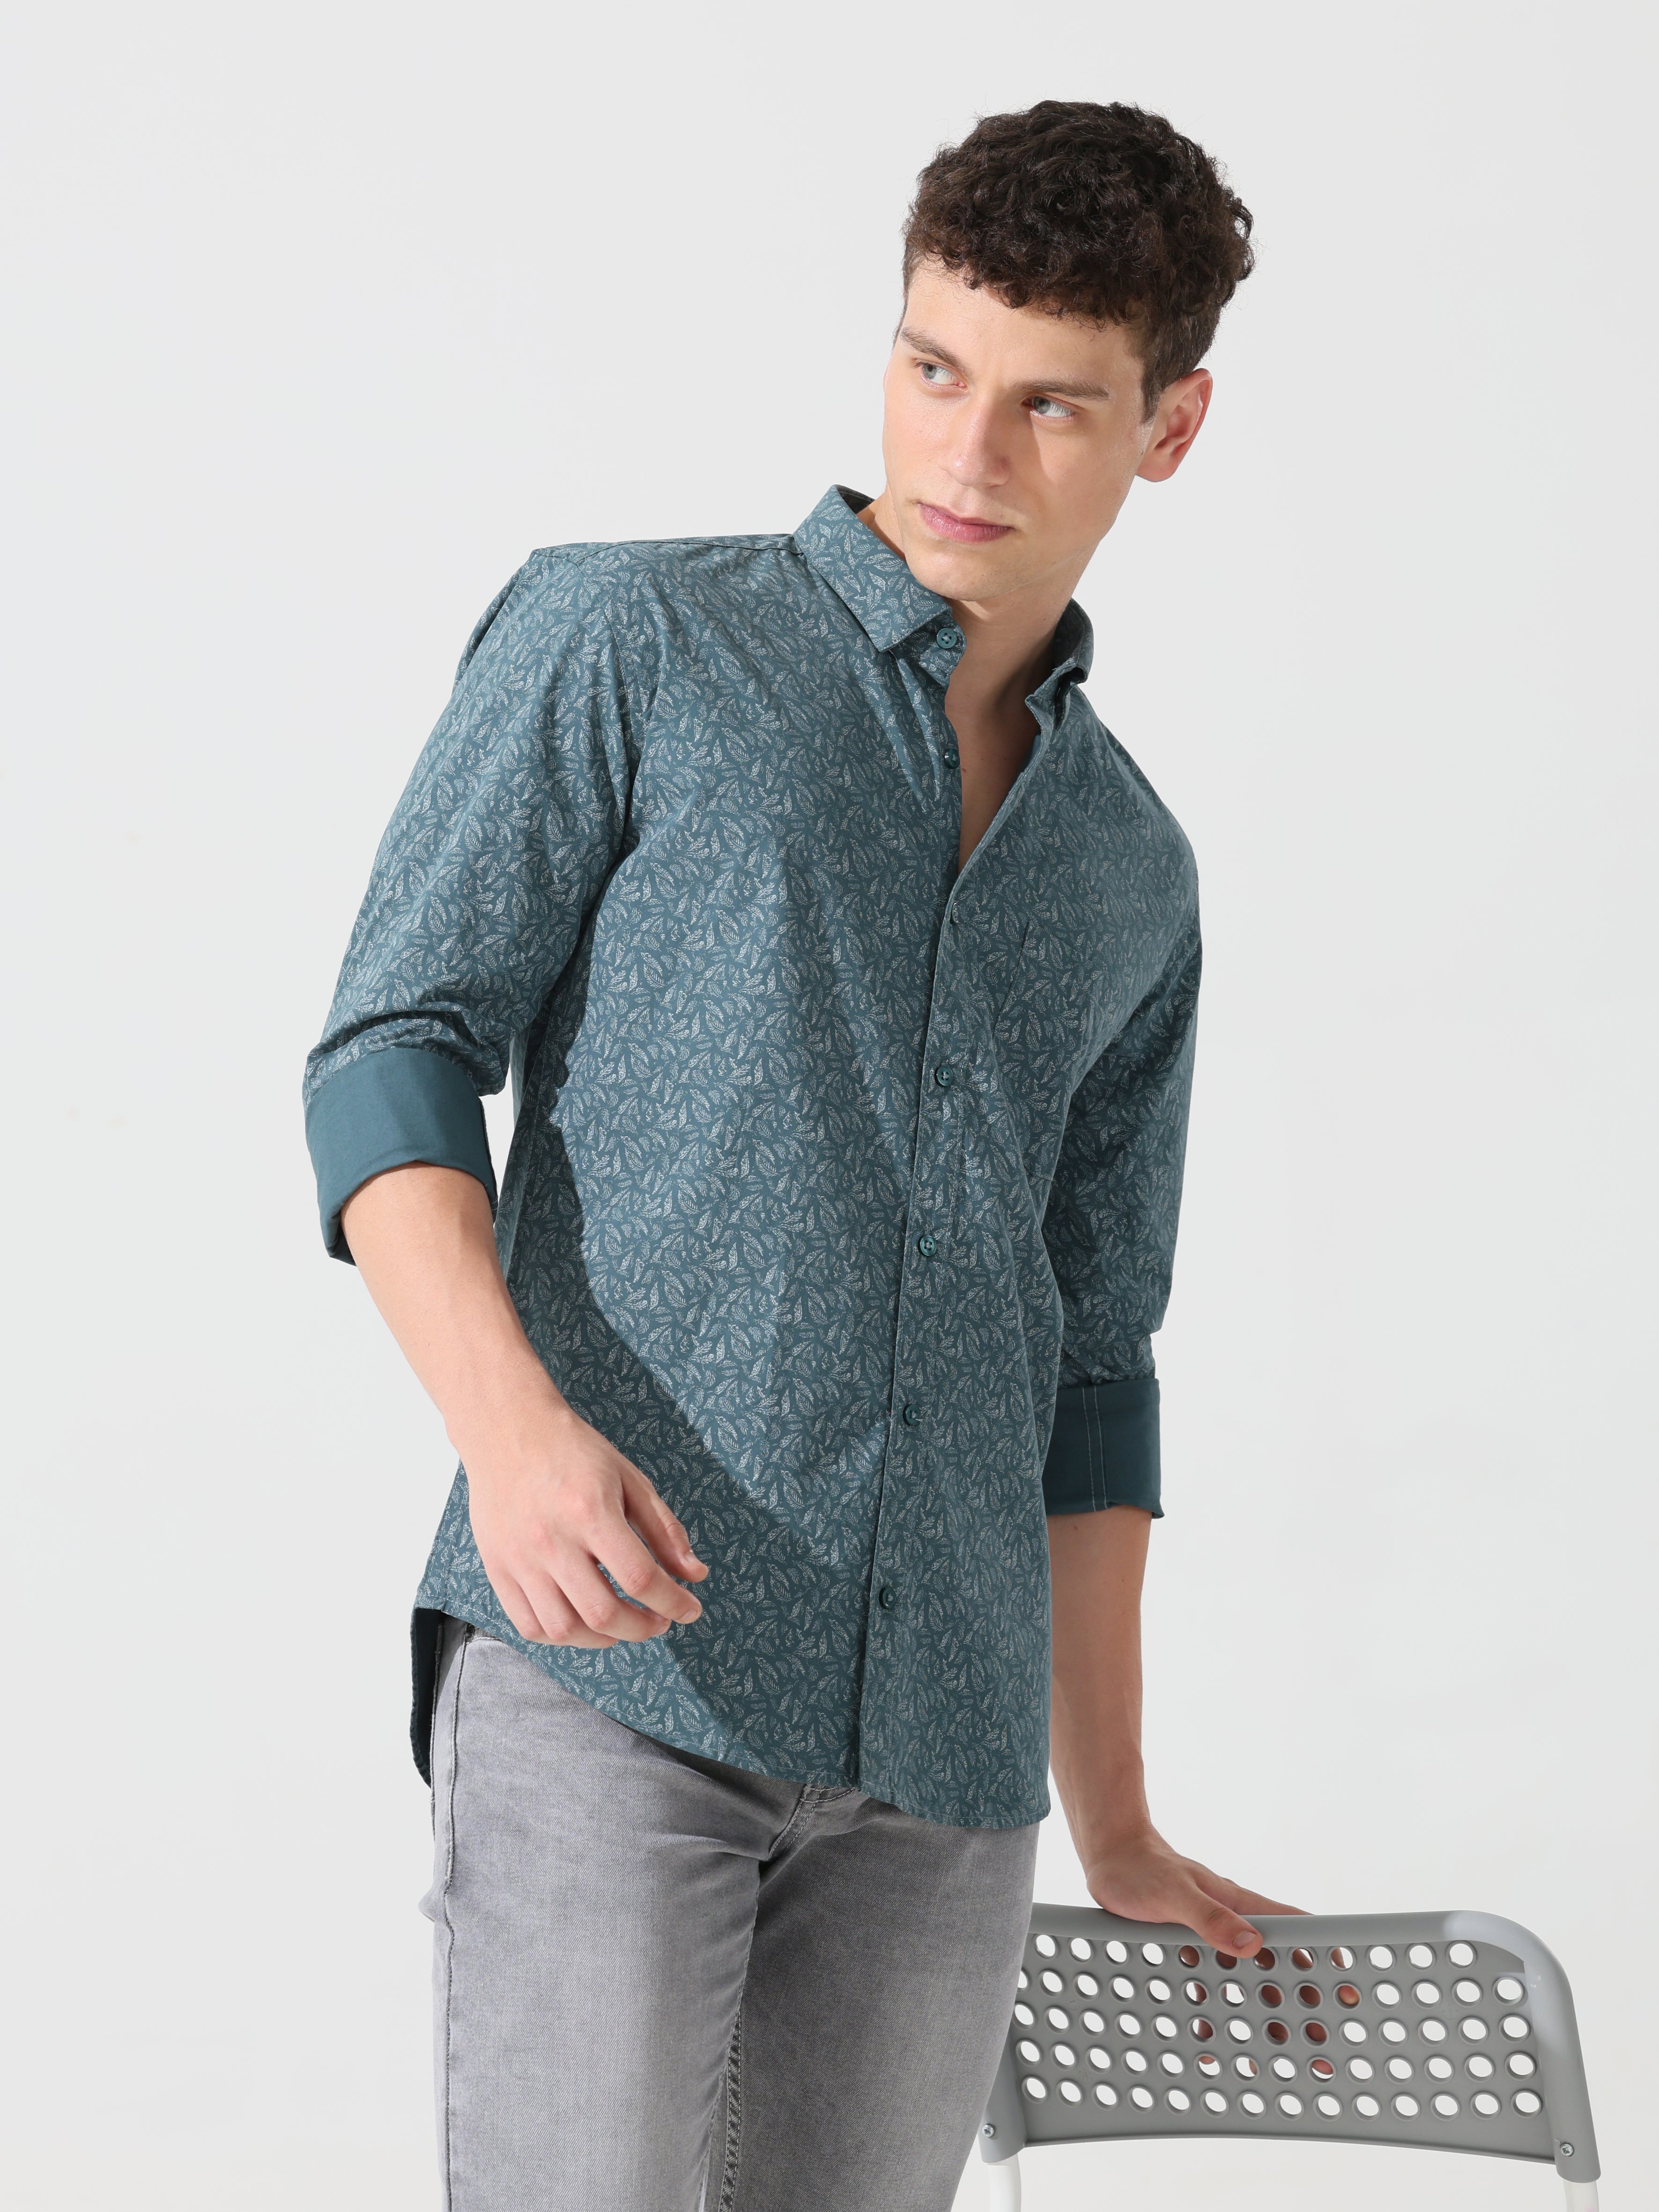 Shaded Spruce printed slim fit shirts - Address pro